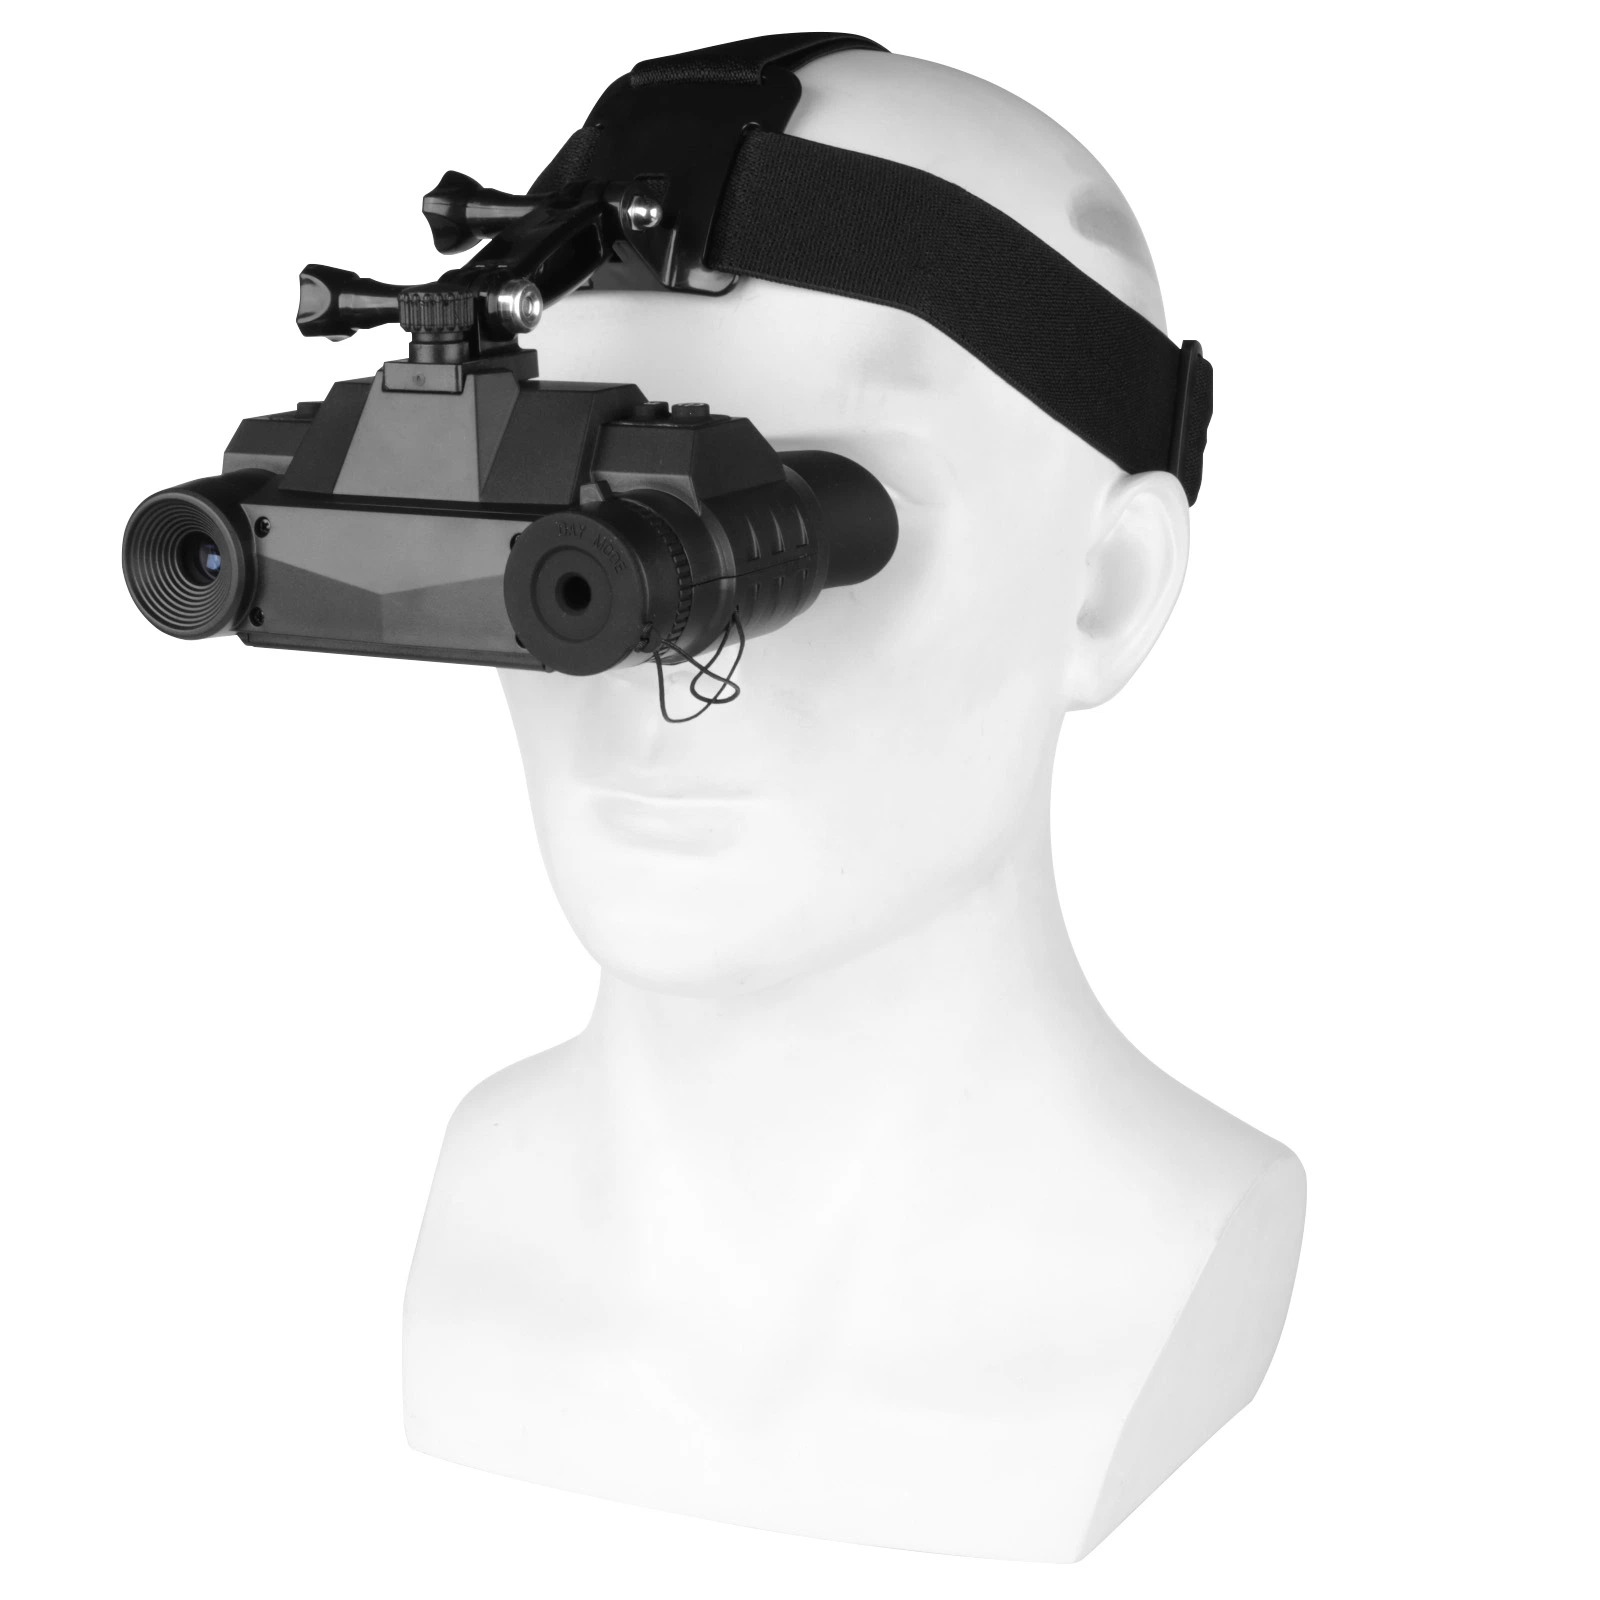 Spina Optics NVG-G1 Fernglas für Helm-Nachtsichtgeräte NVG IR 940nm Head Mounted Goggles Night Vision Hunting Surveillance